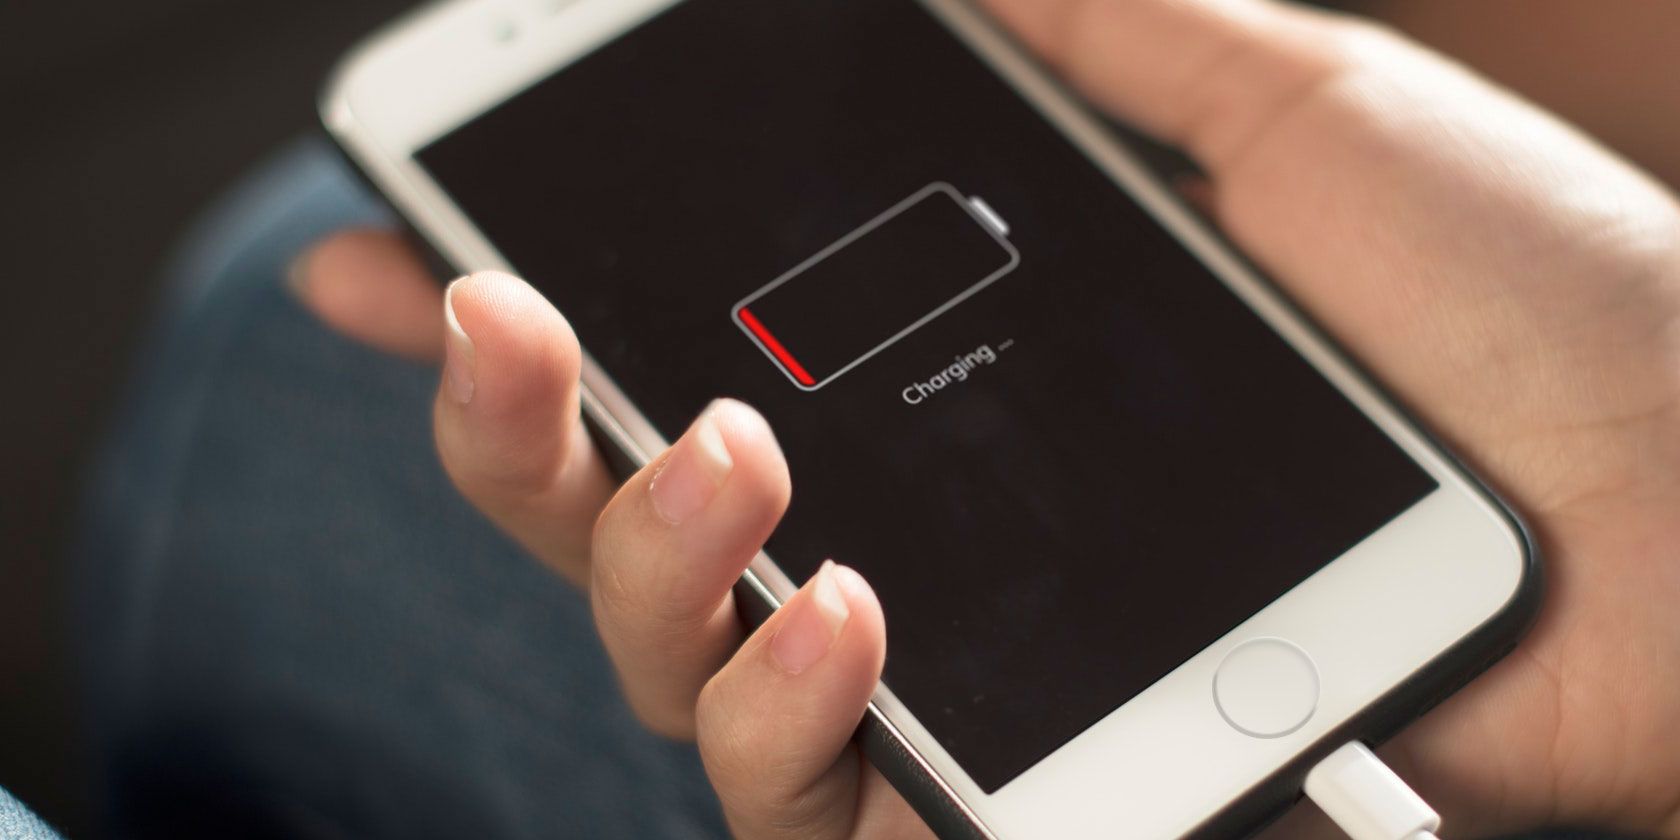 Smartphone batteries can last several times longer – revolutionary technologies